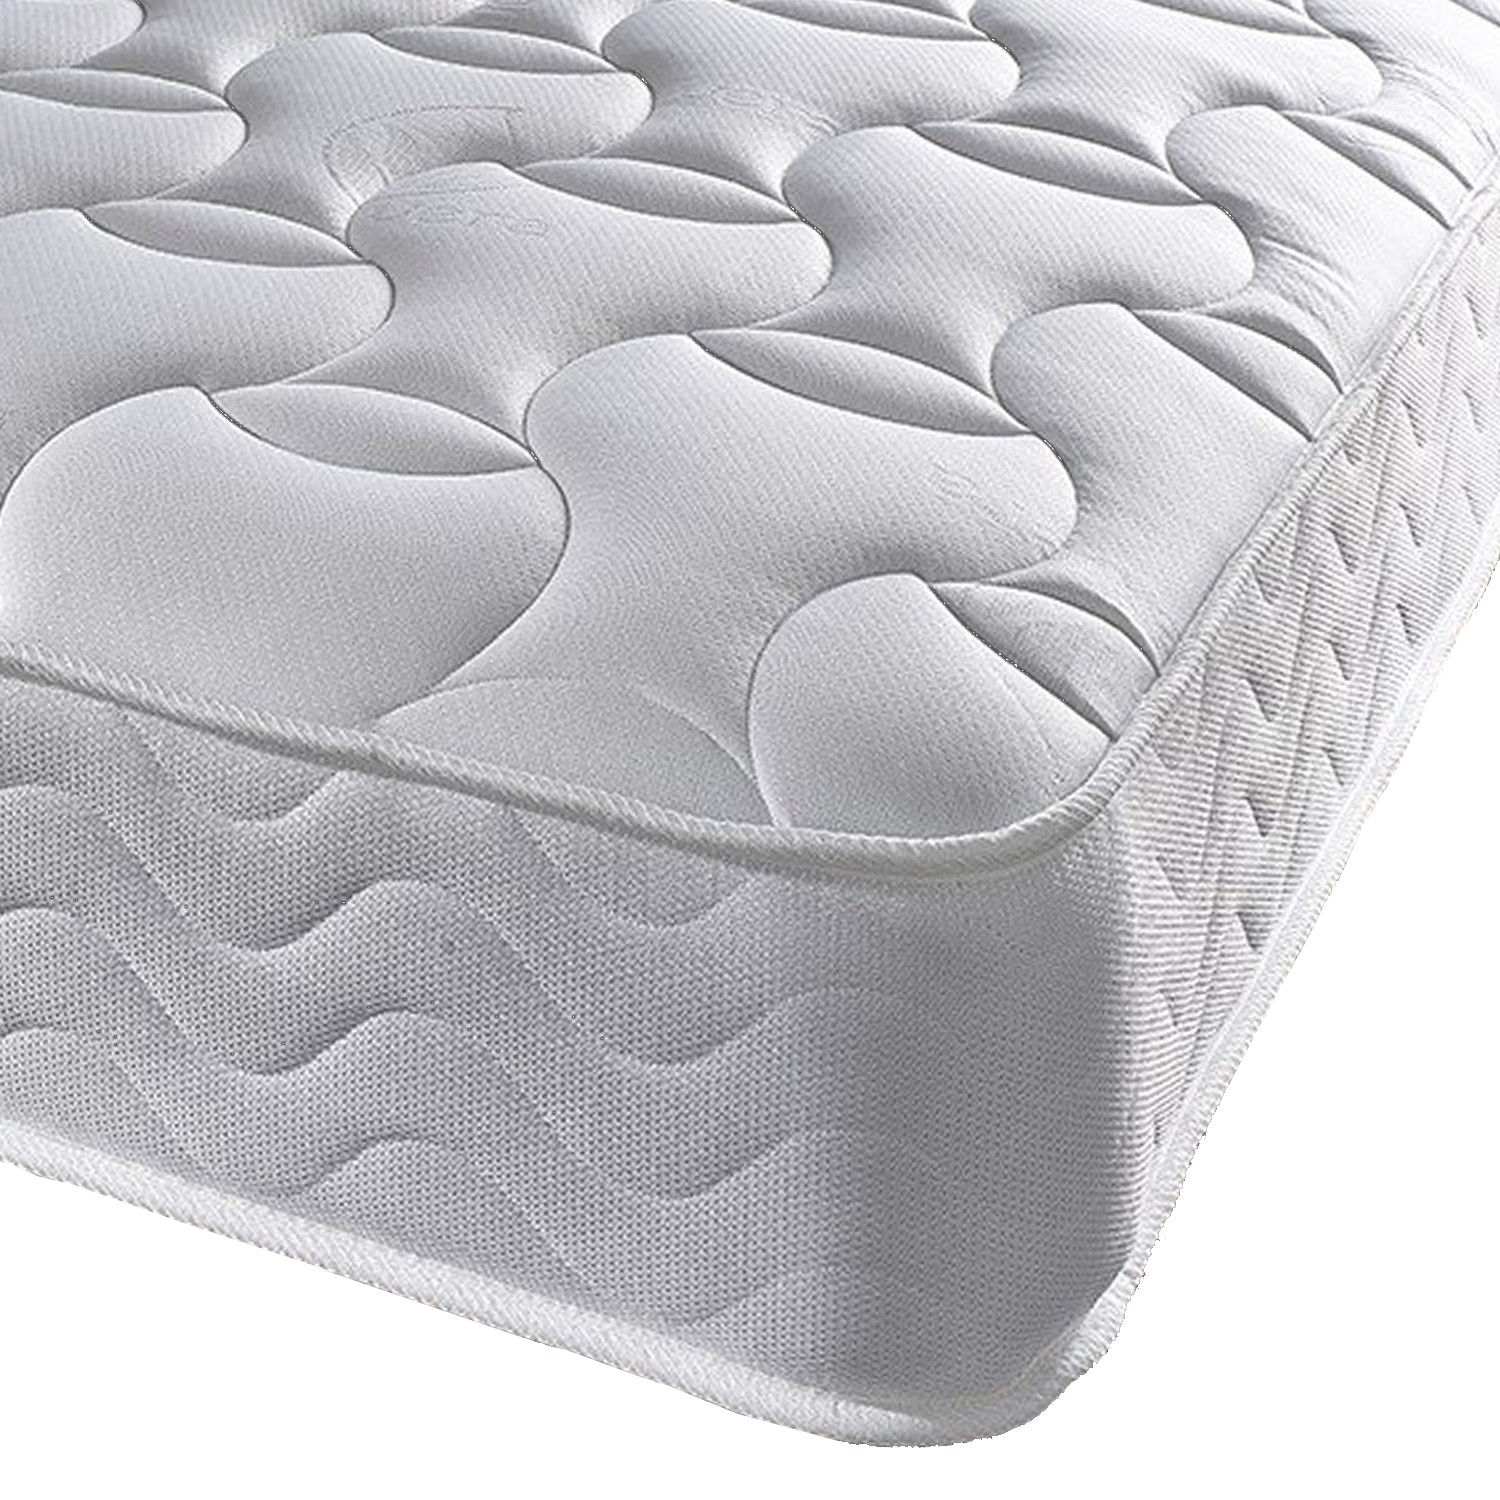 Memory small single 2'6 bonnell combination mattress - medium firmness